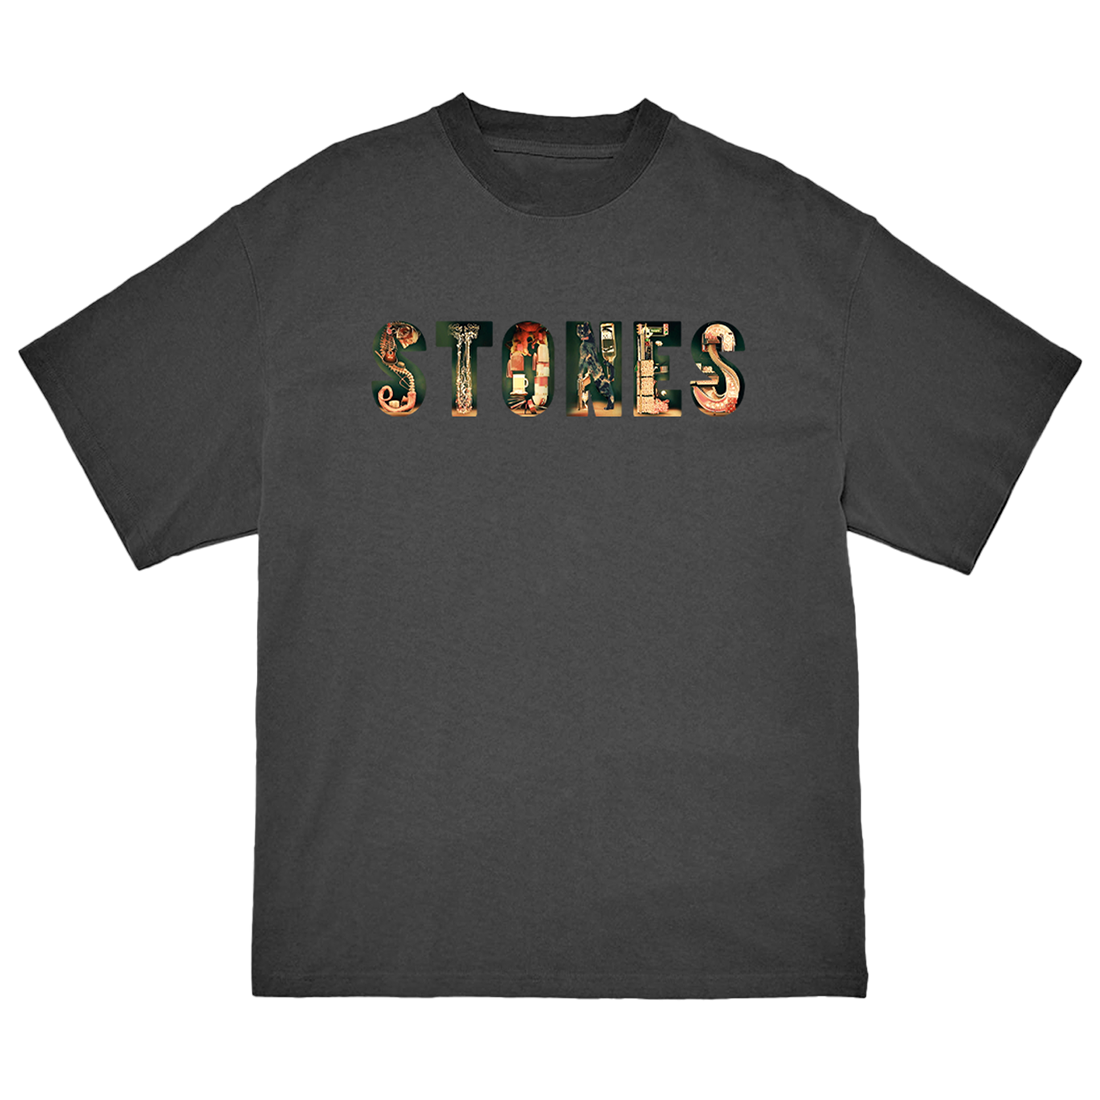 The Rolling Stones - Stones "GRRR!" Live T-Shirt